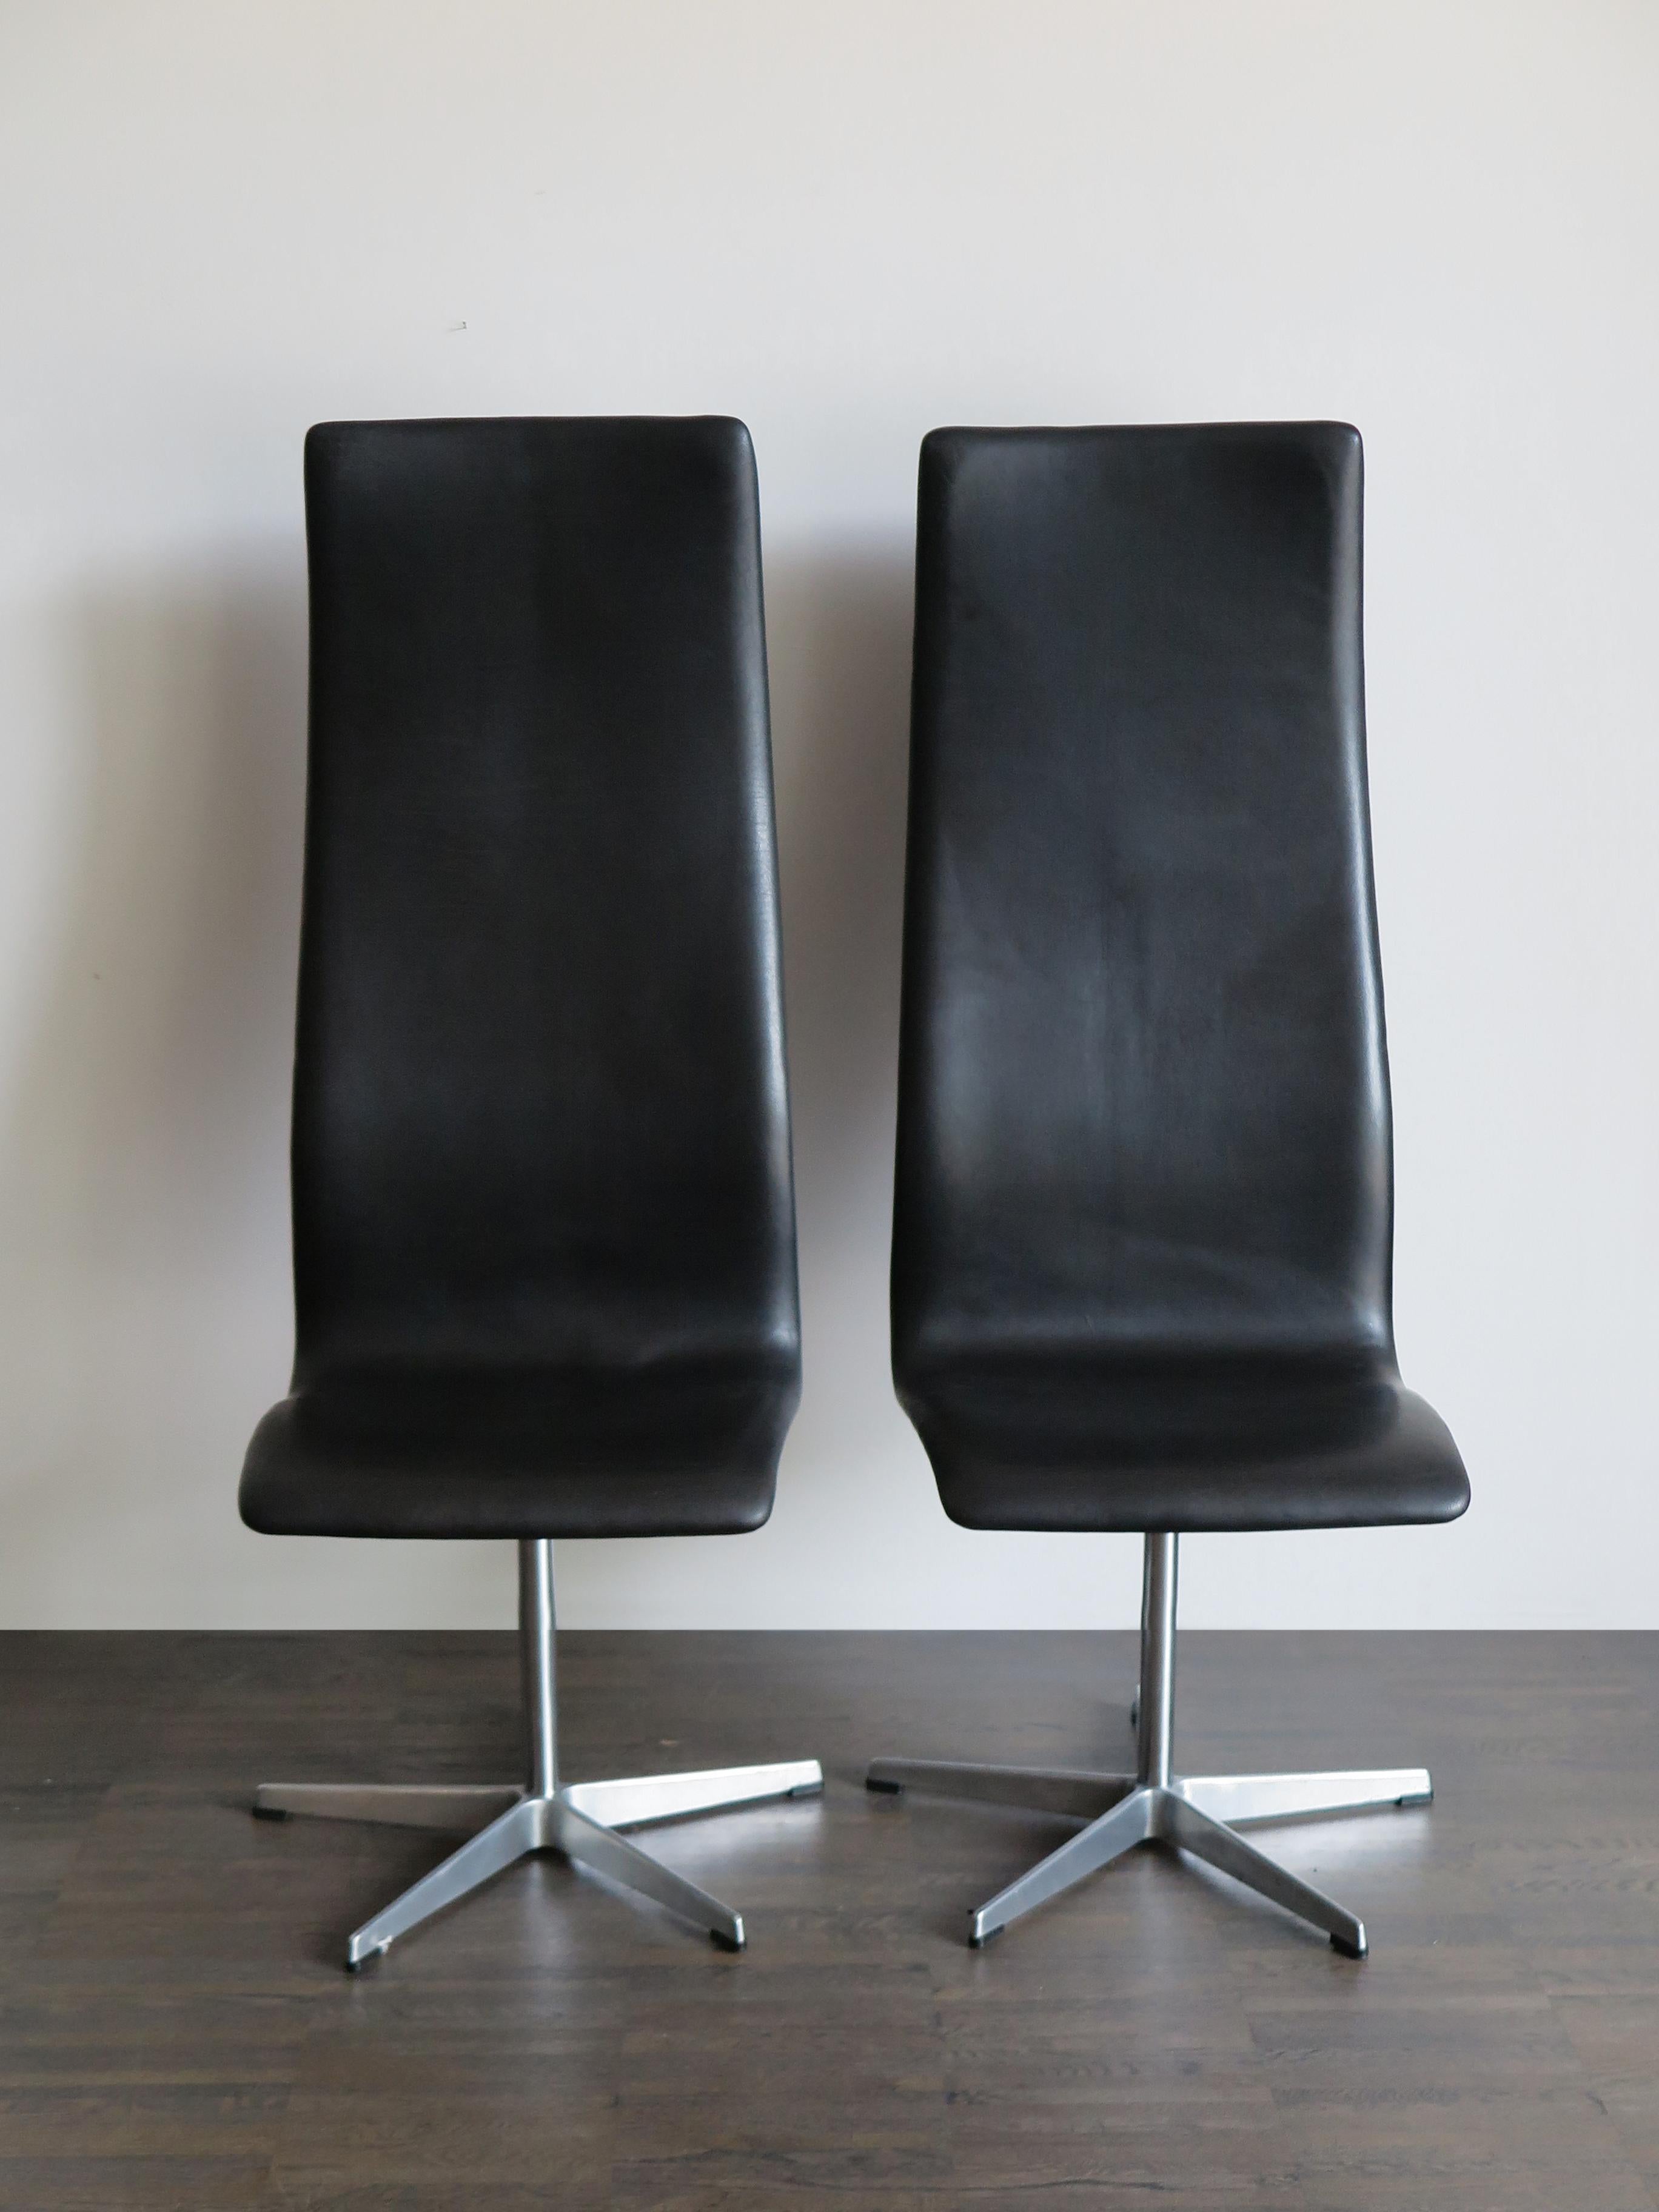 Scandinavian Modern Oxford Midcentury Black Leather Chairs by Arne Jacobsen for Fritz Hansen, 1960s For Sale